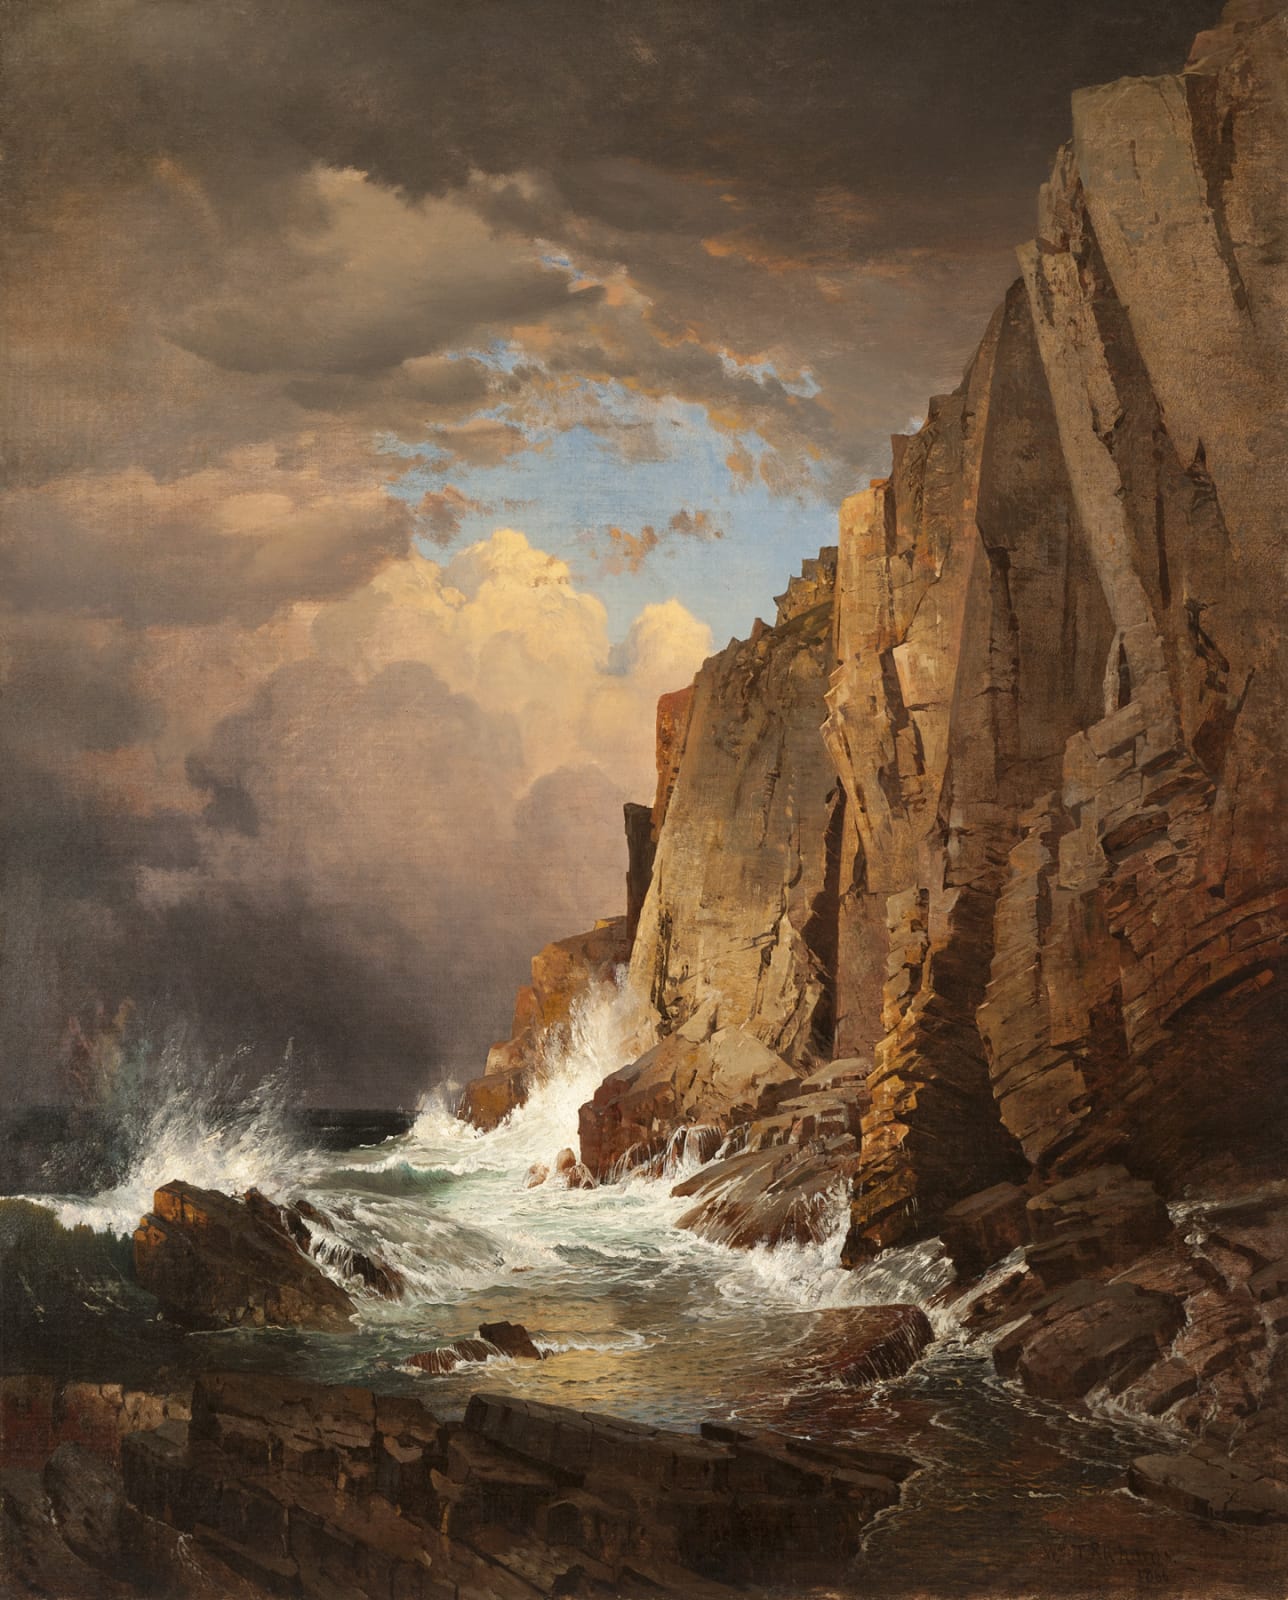 William Trost Richards, The Otter Cliffs, 1866